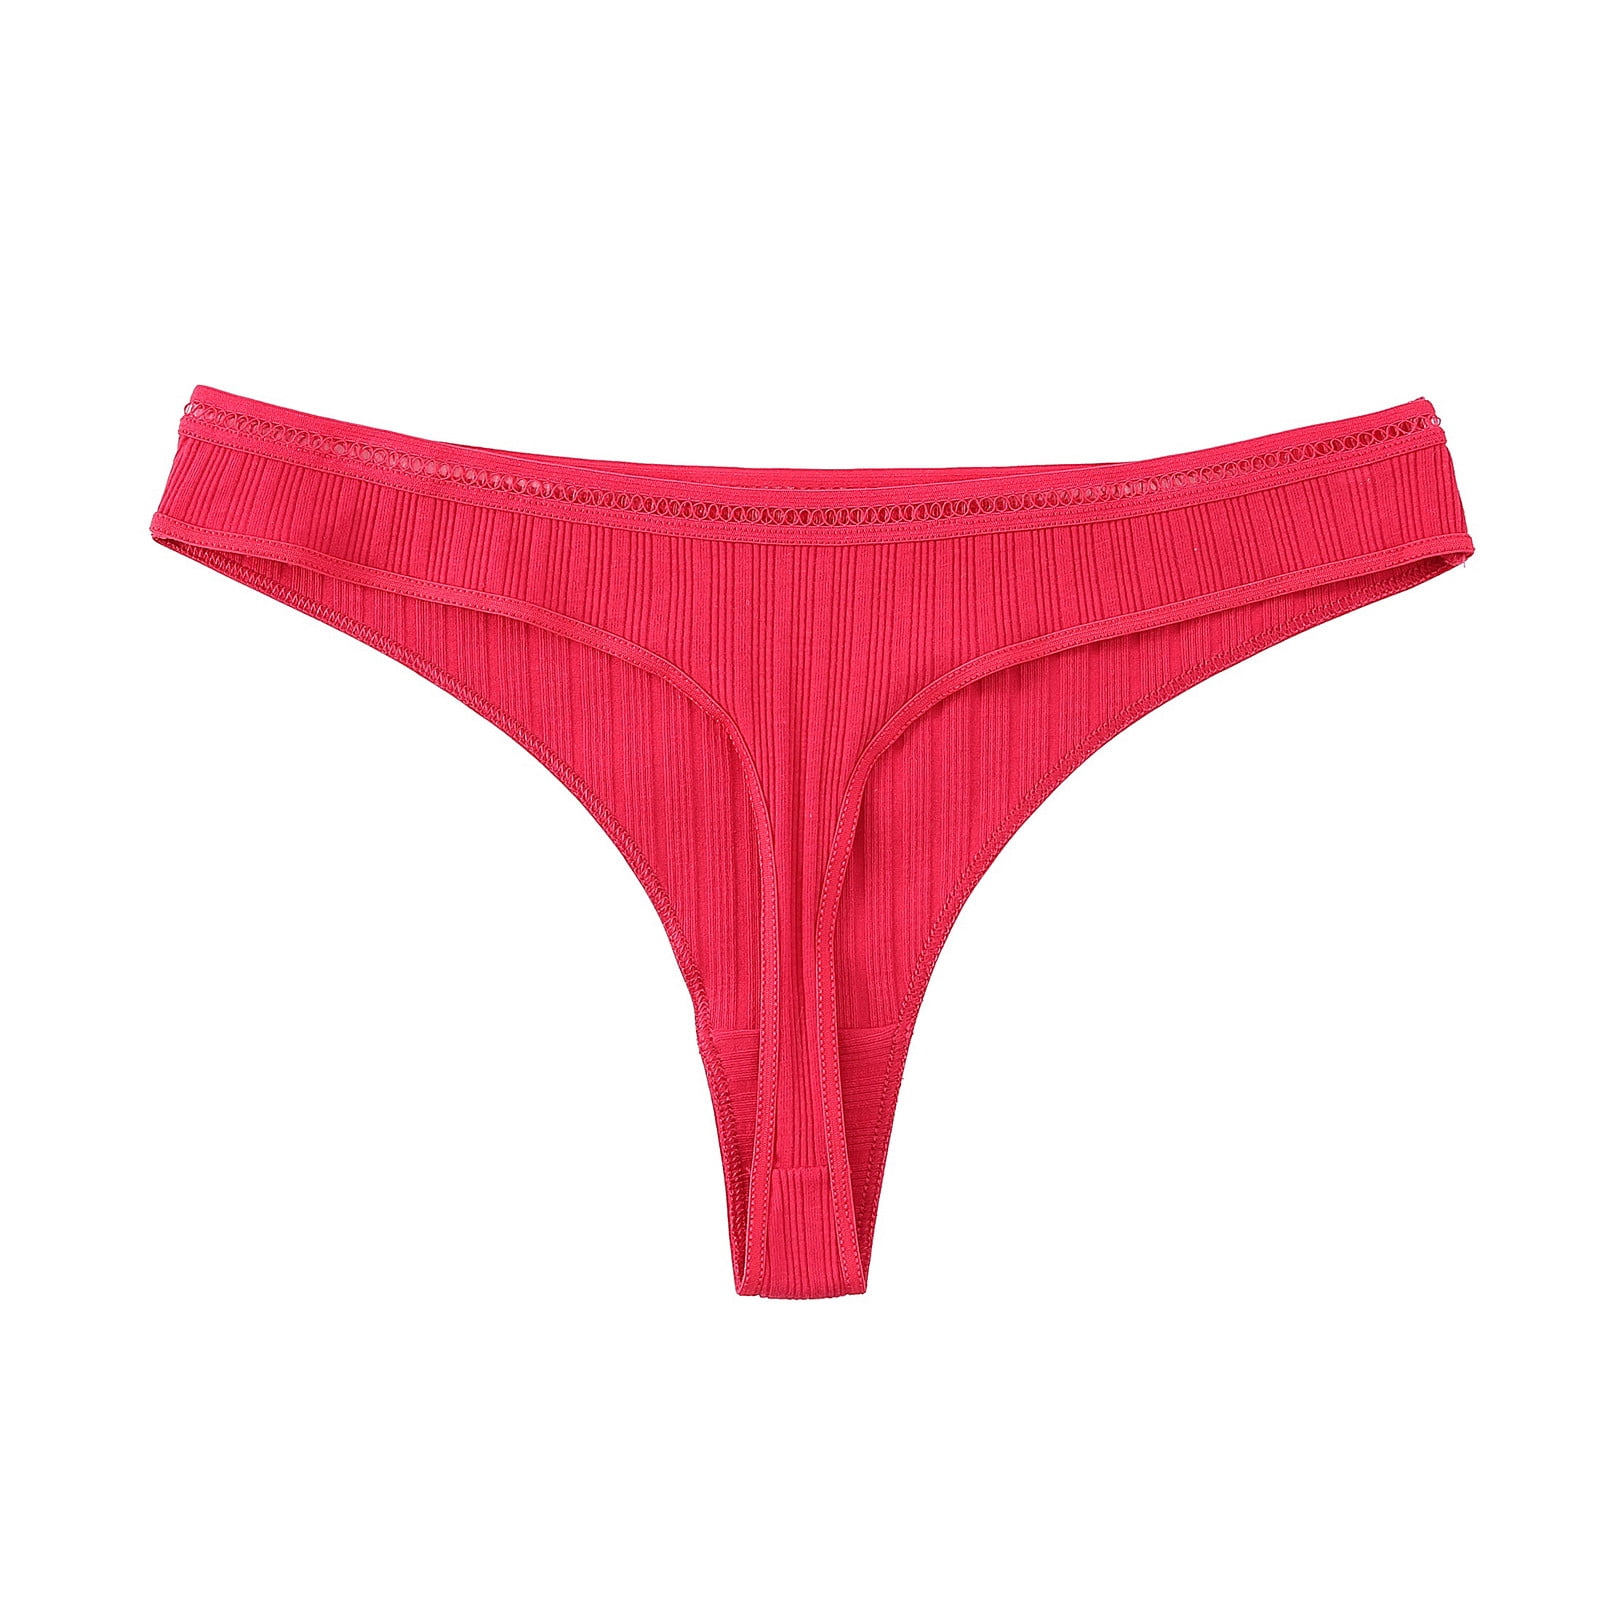 XZHGS Floral Summer Brief Women Prints Panties Thong Colors Lingerie G  String T Back underpants Comfort Soft Low Rise Panties Athartle Bodysuit 